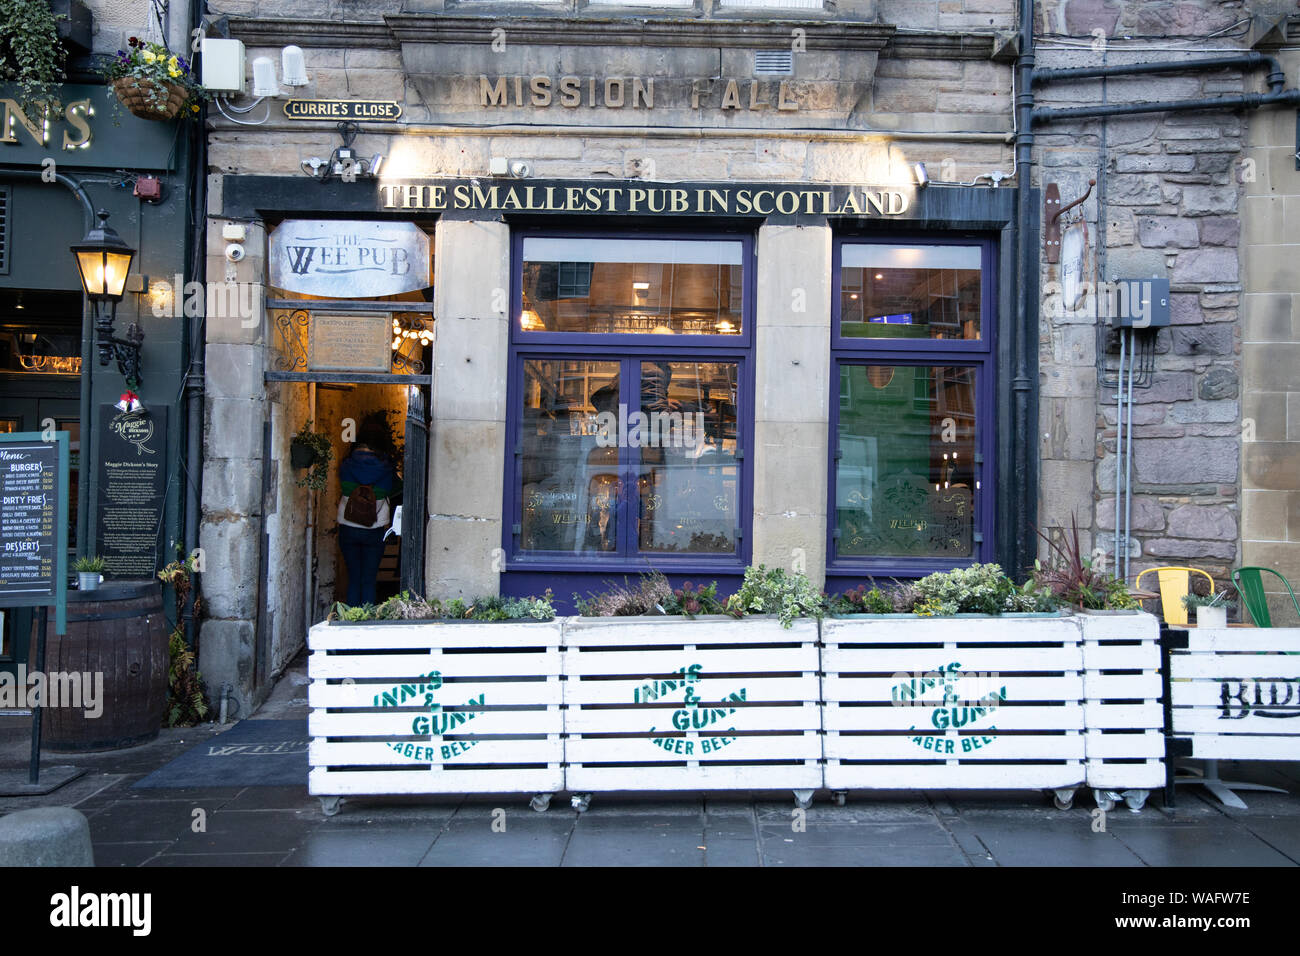 Scotland's smallest pub located in Grassmarket Edinburgh measuring 17ft by 14ft (5.2m by 4.5m) Stock Photo